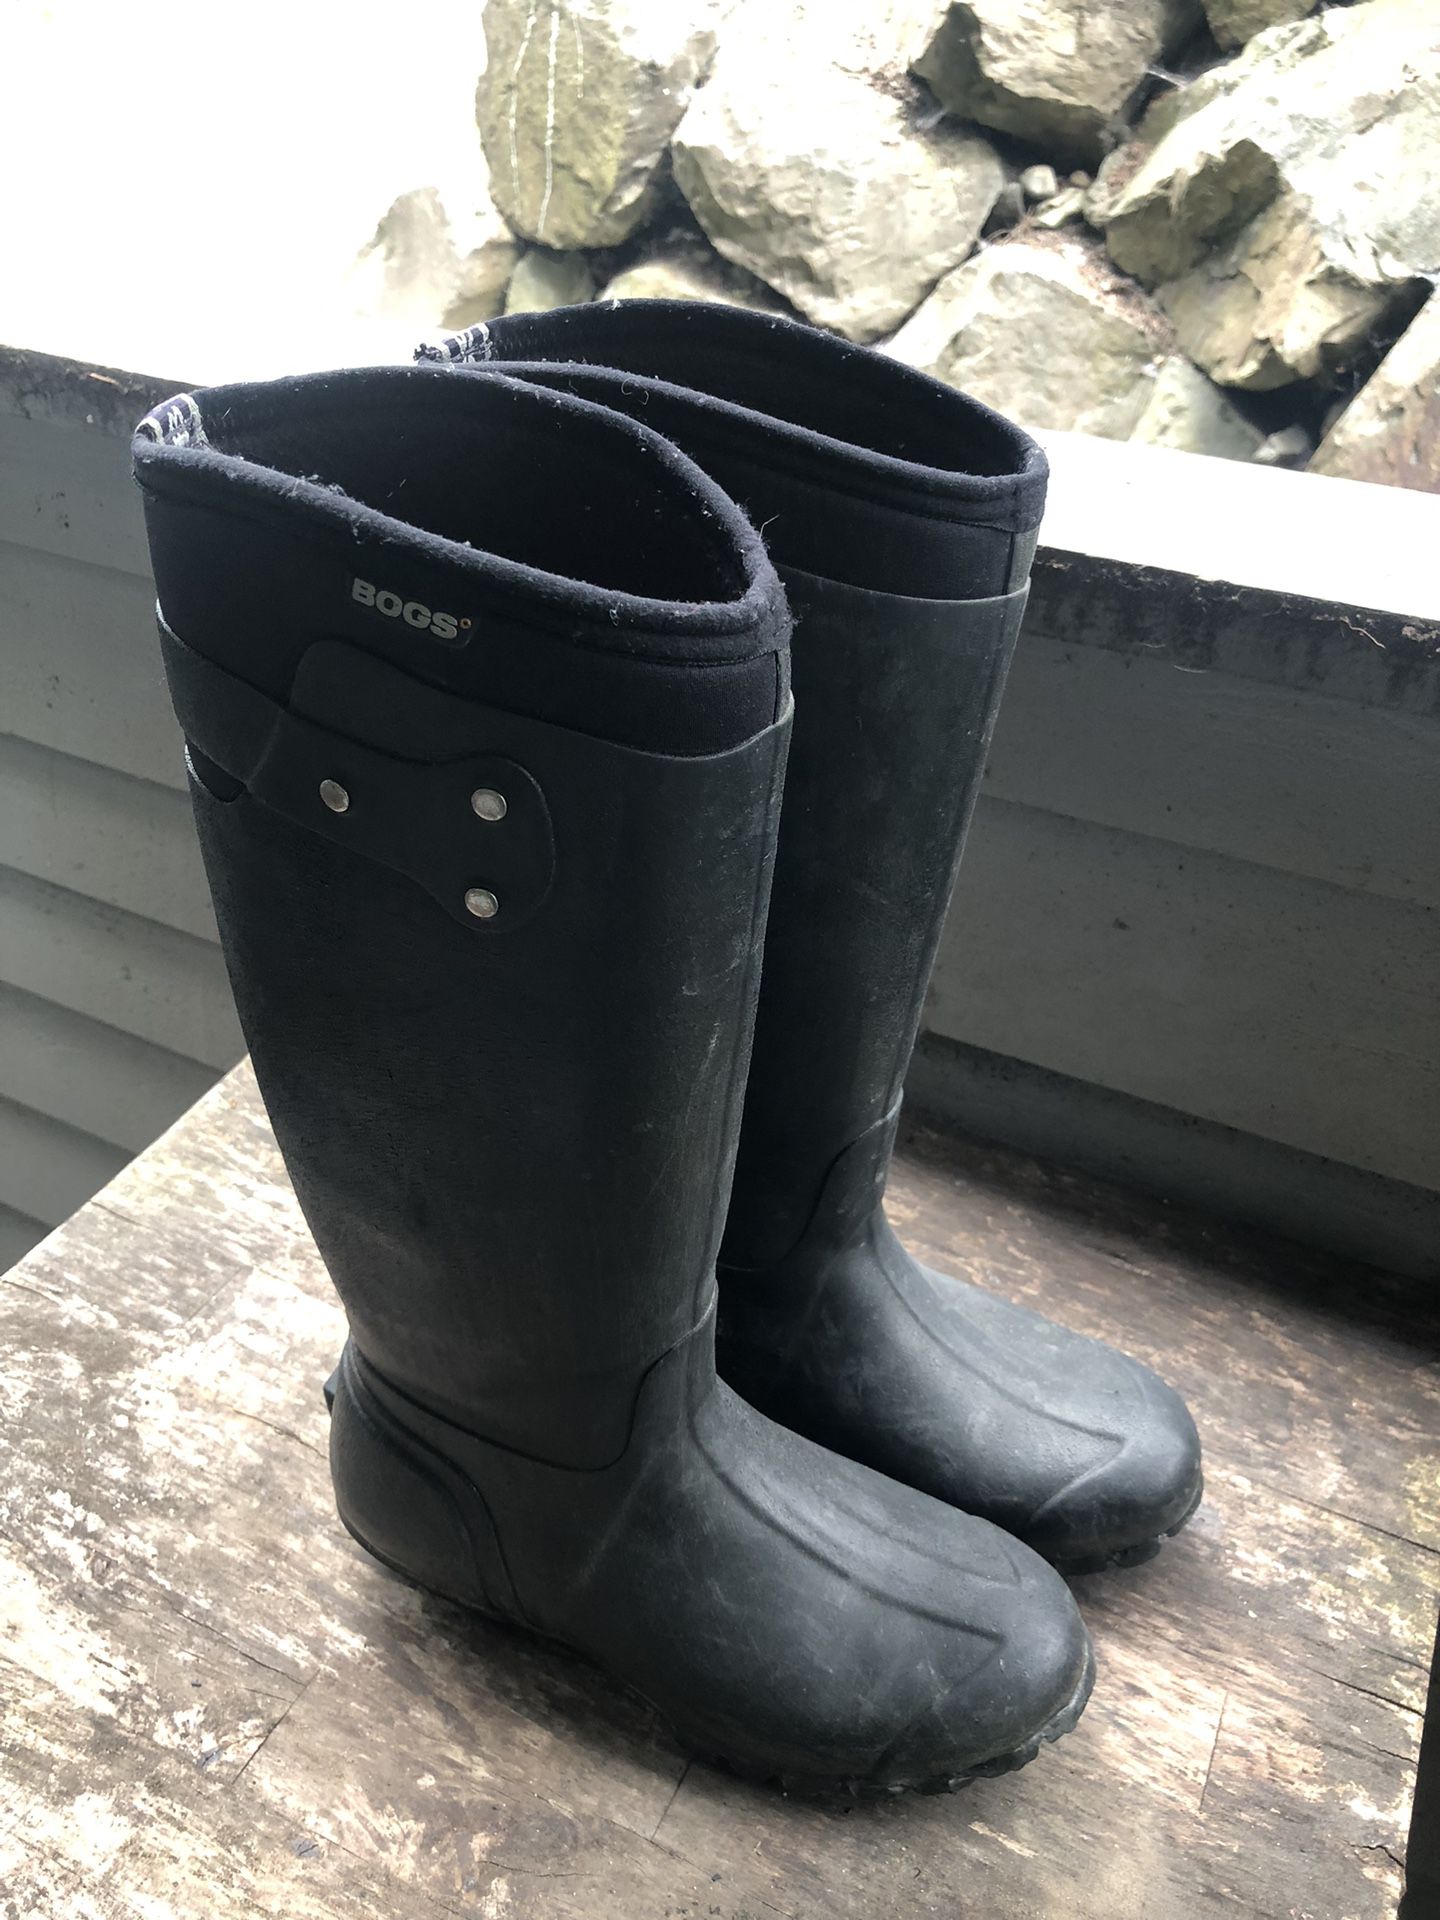 Bogs Neo-Tech Tall Black Boots Waterproof Kettering Rain -15 degree Boots Sz W9